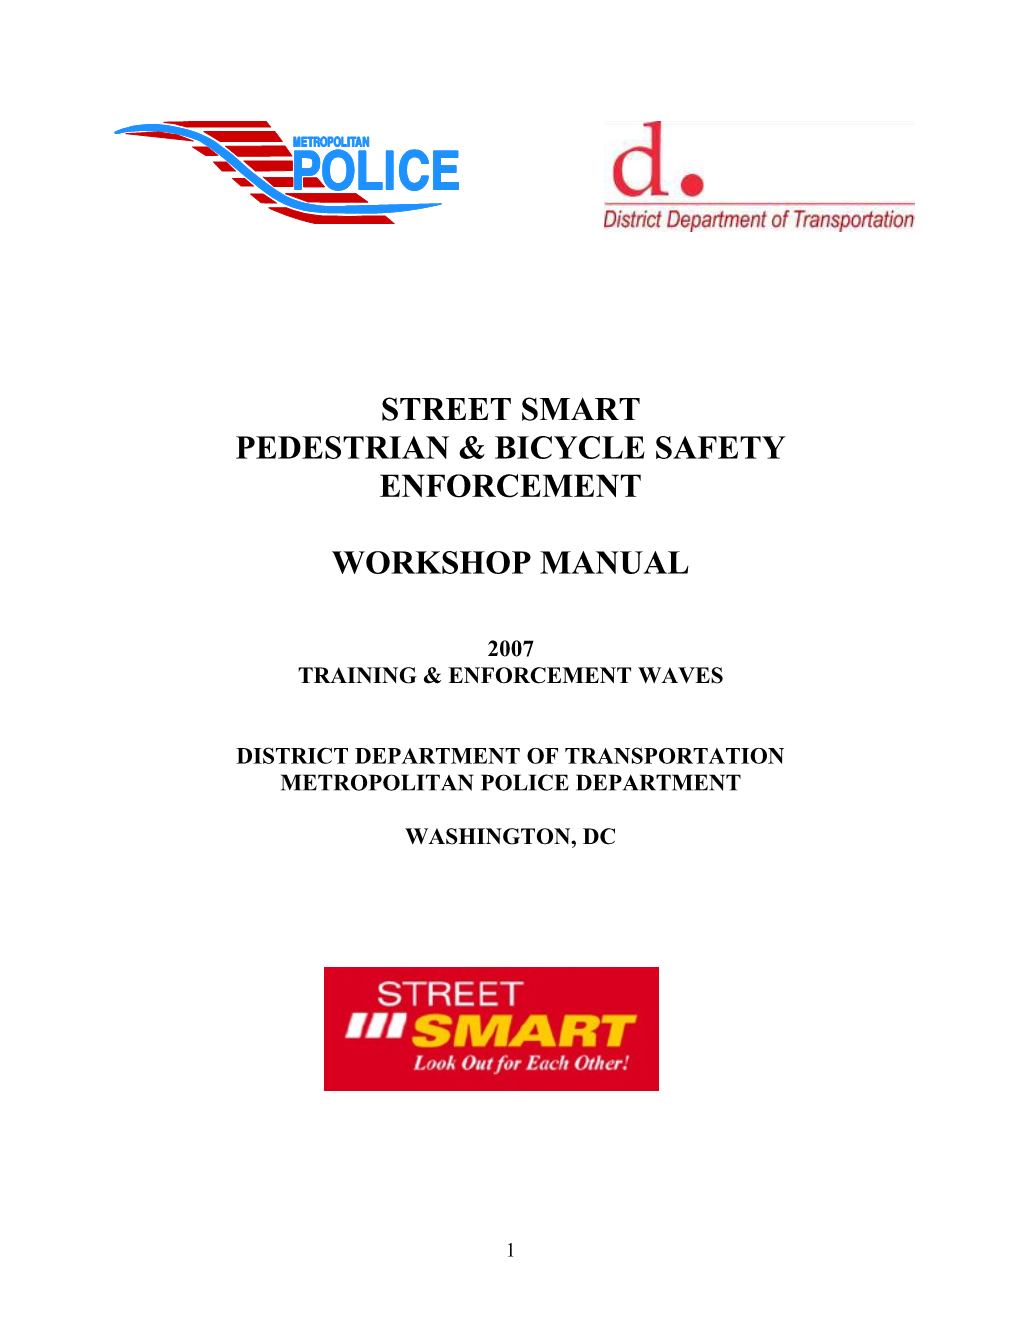 Key Points - Pedestrian Law Enforcement / Making a Contact